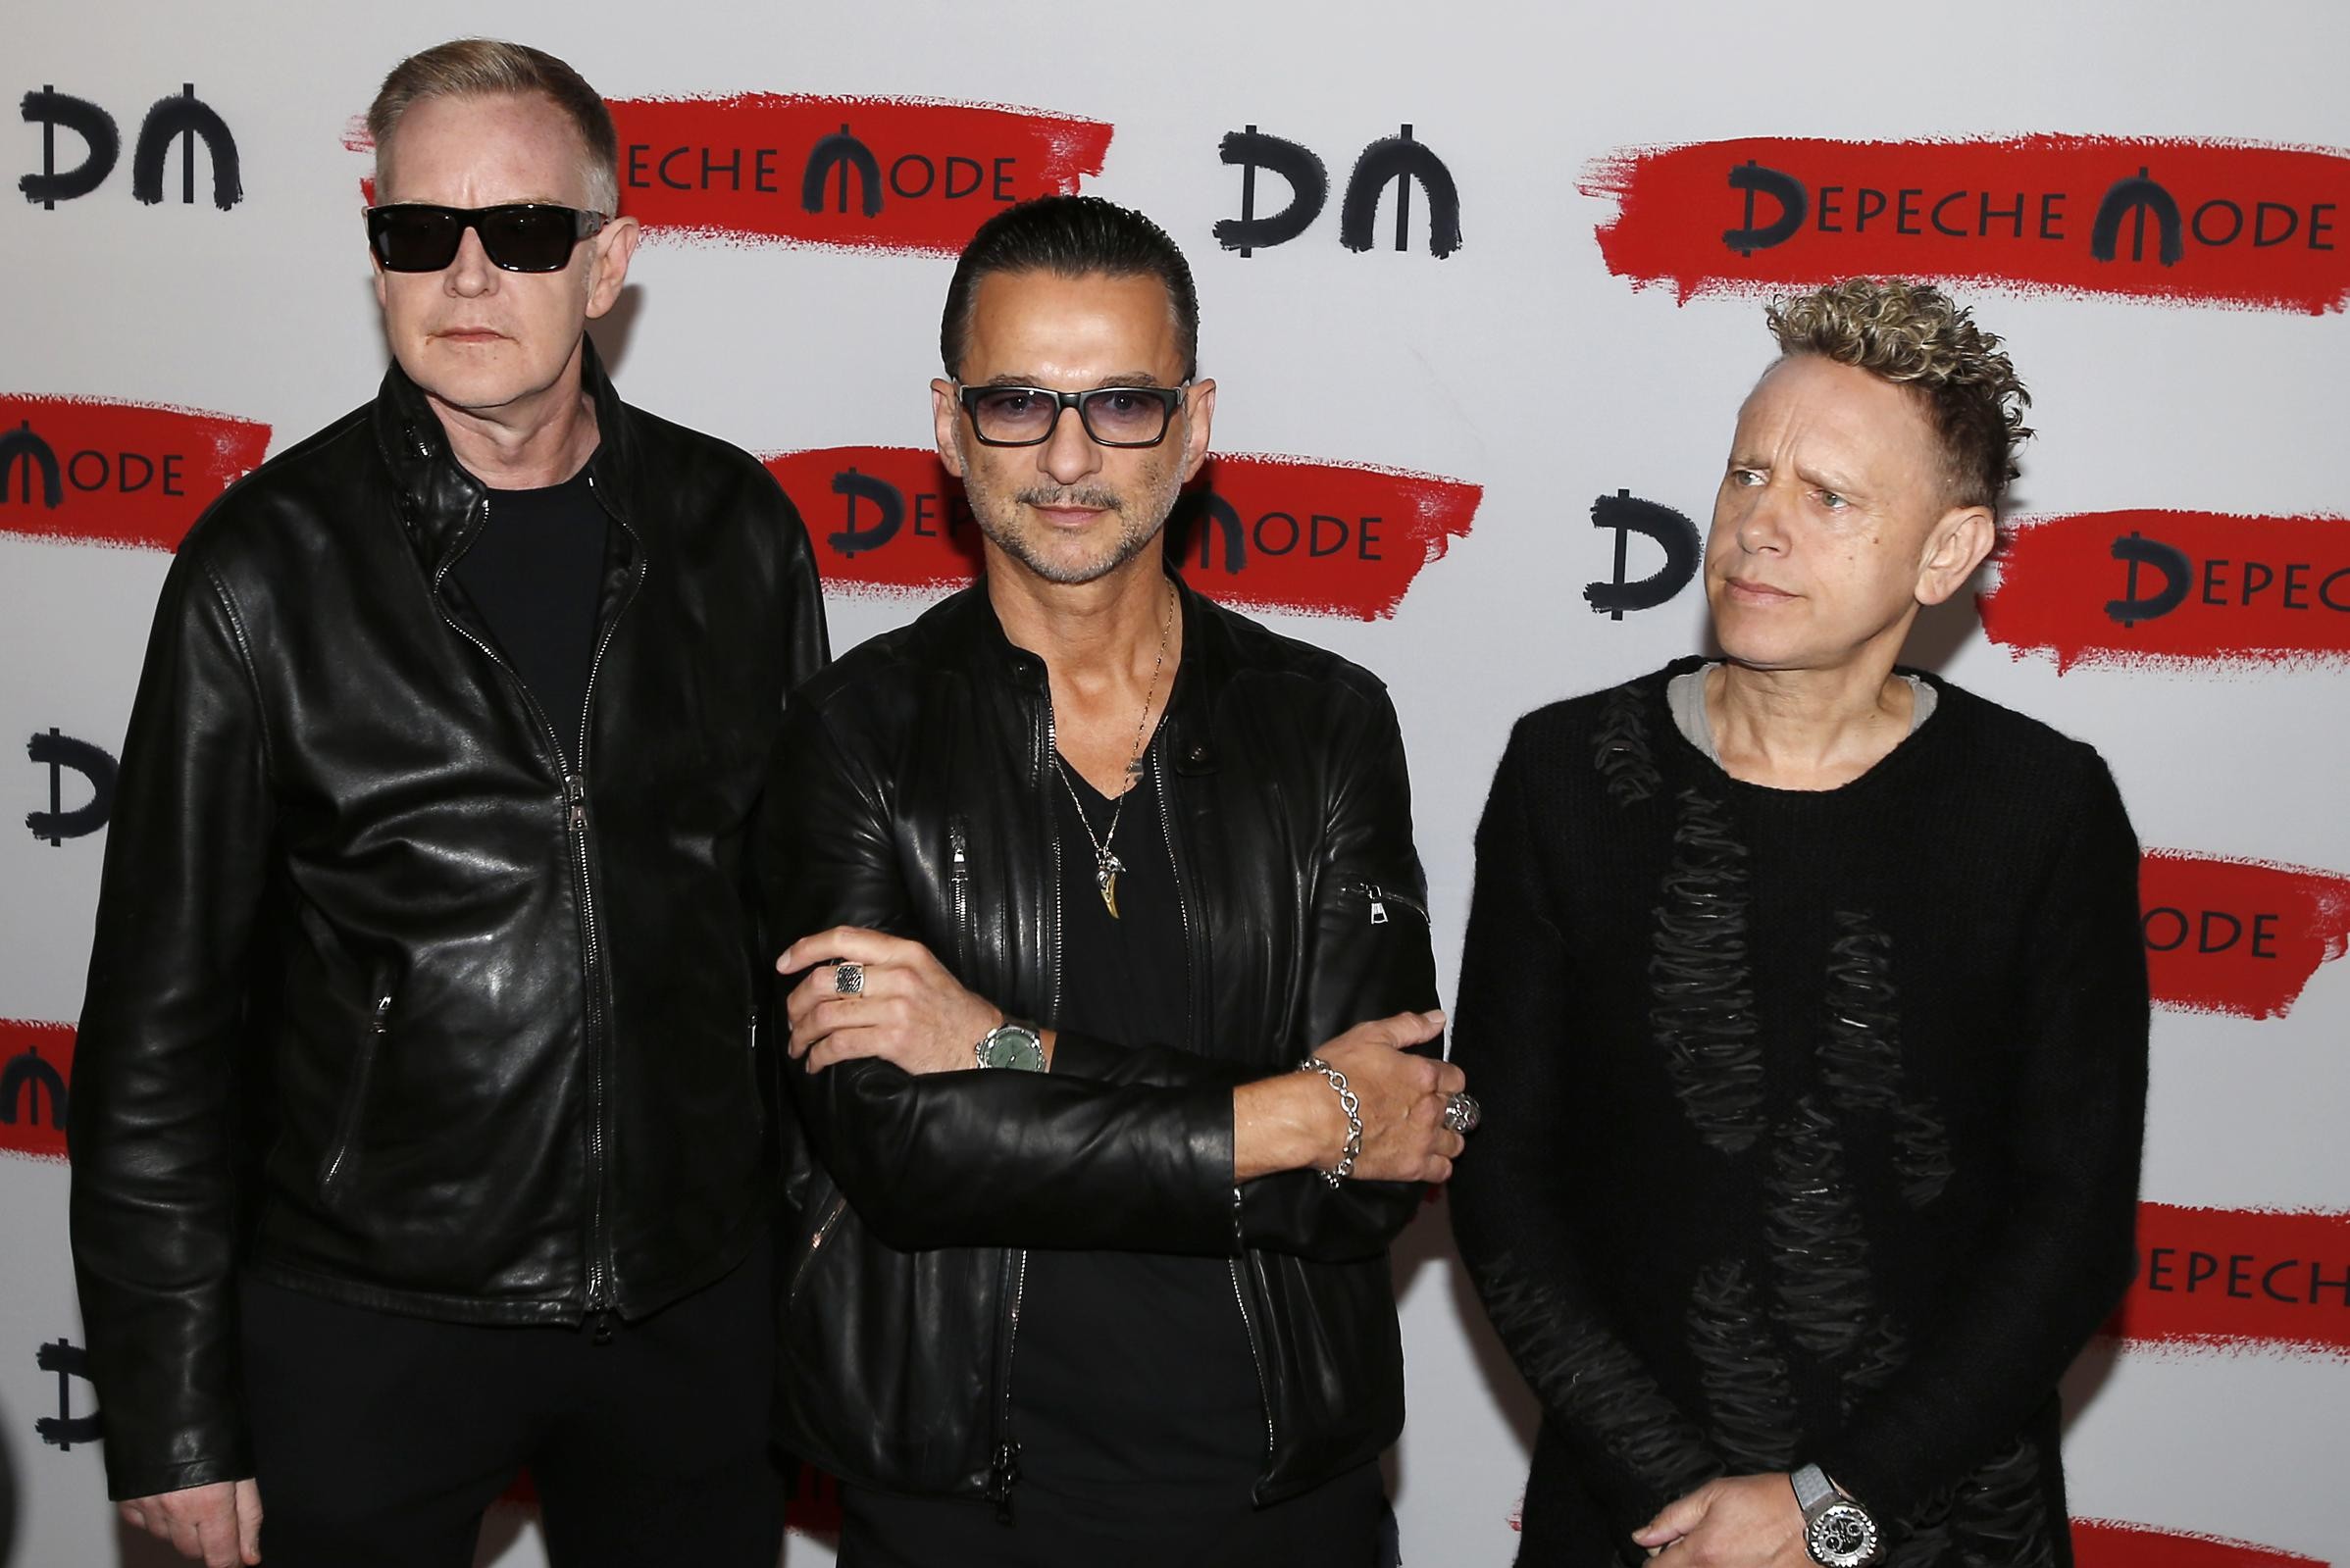 Andy Flechter (60), keyboardist of Depeche Mode, passed away